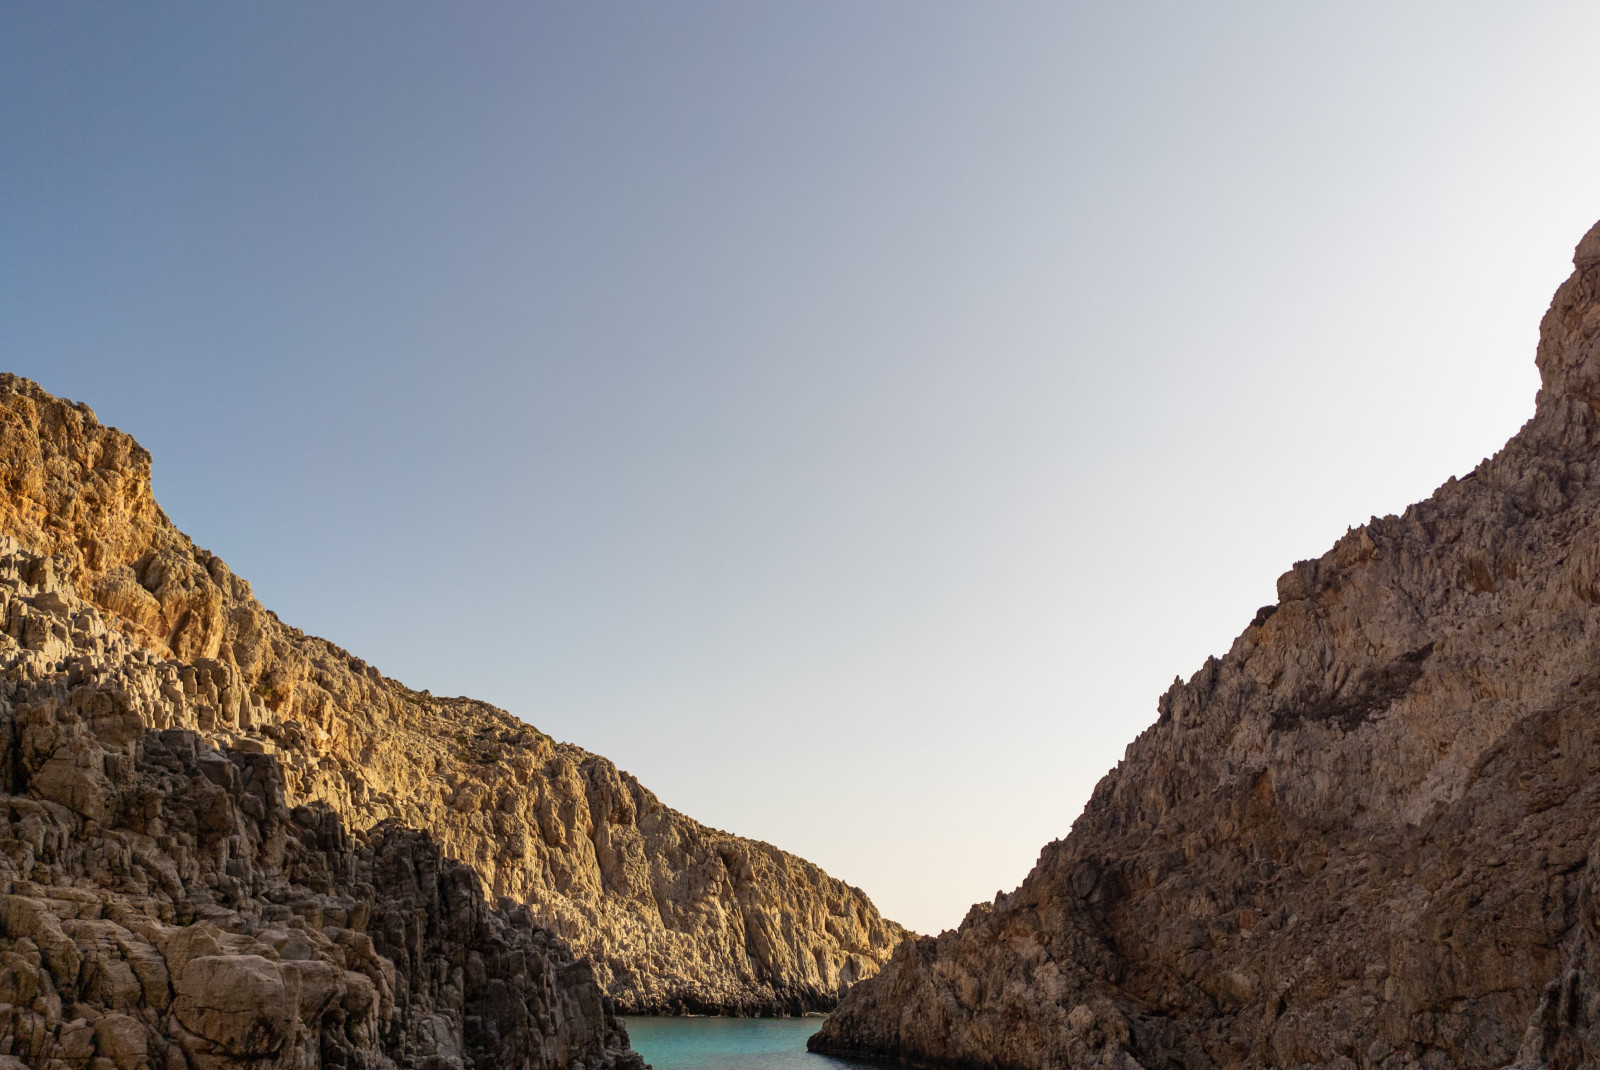 Three brown seaside cliffs in Crete with blue water